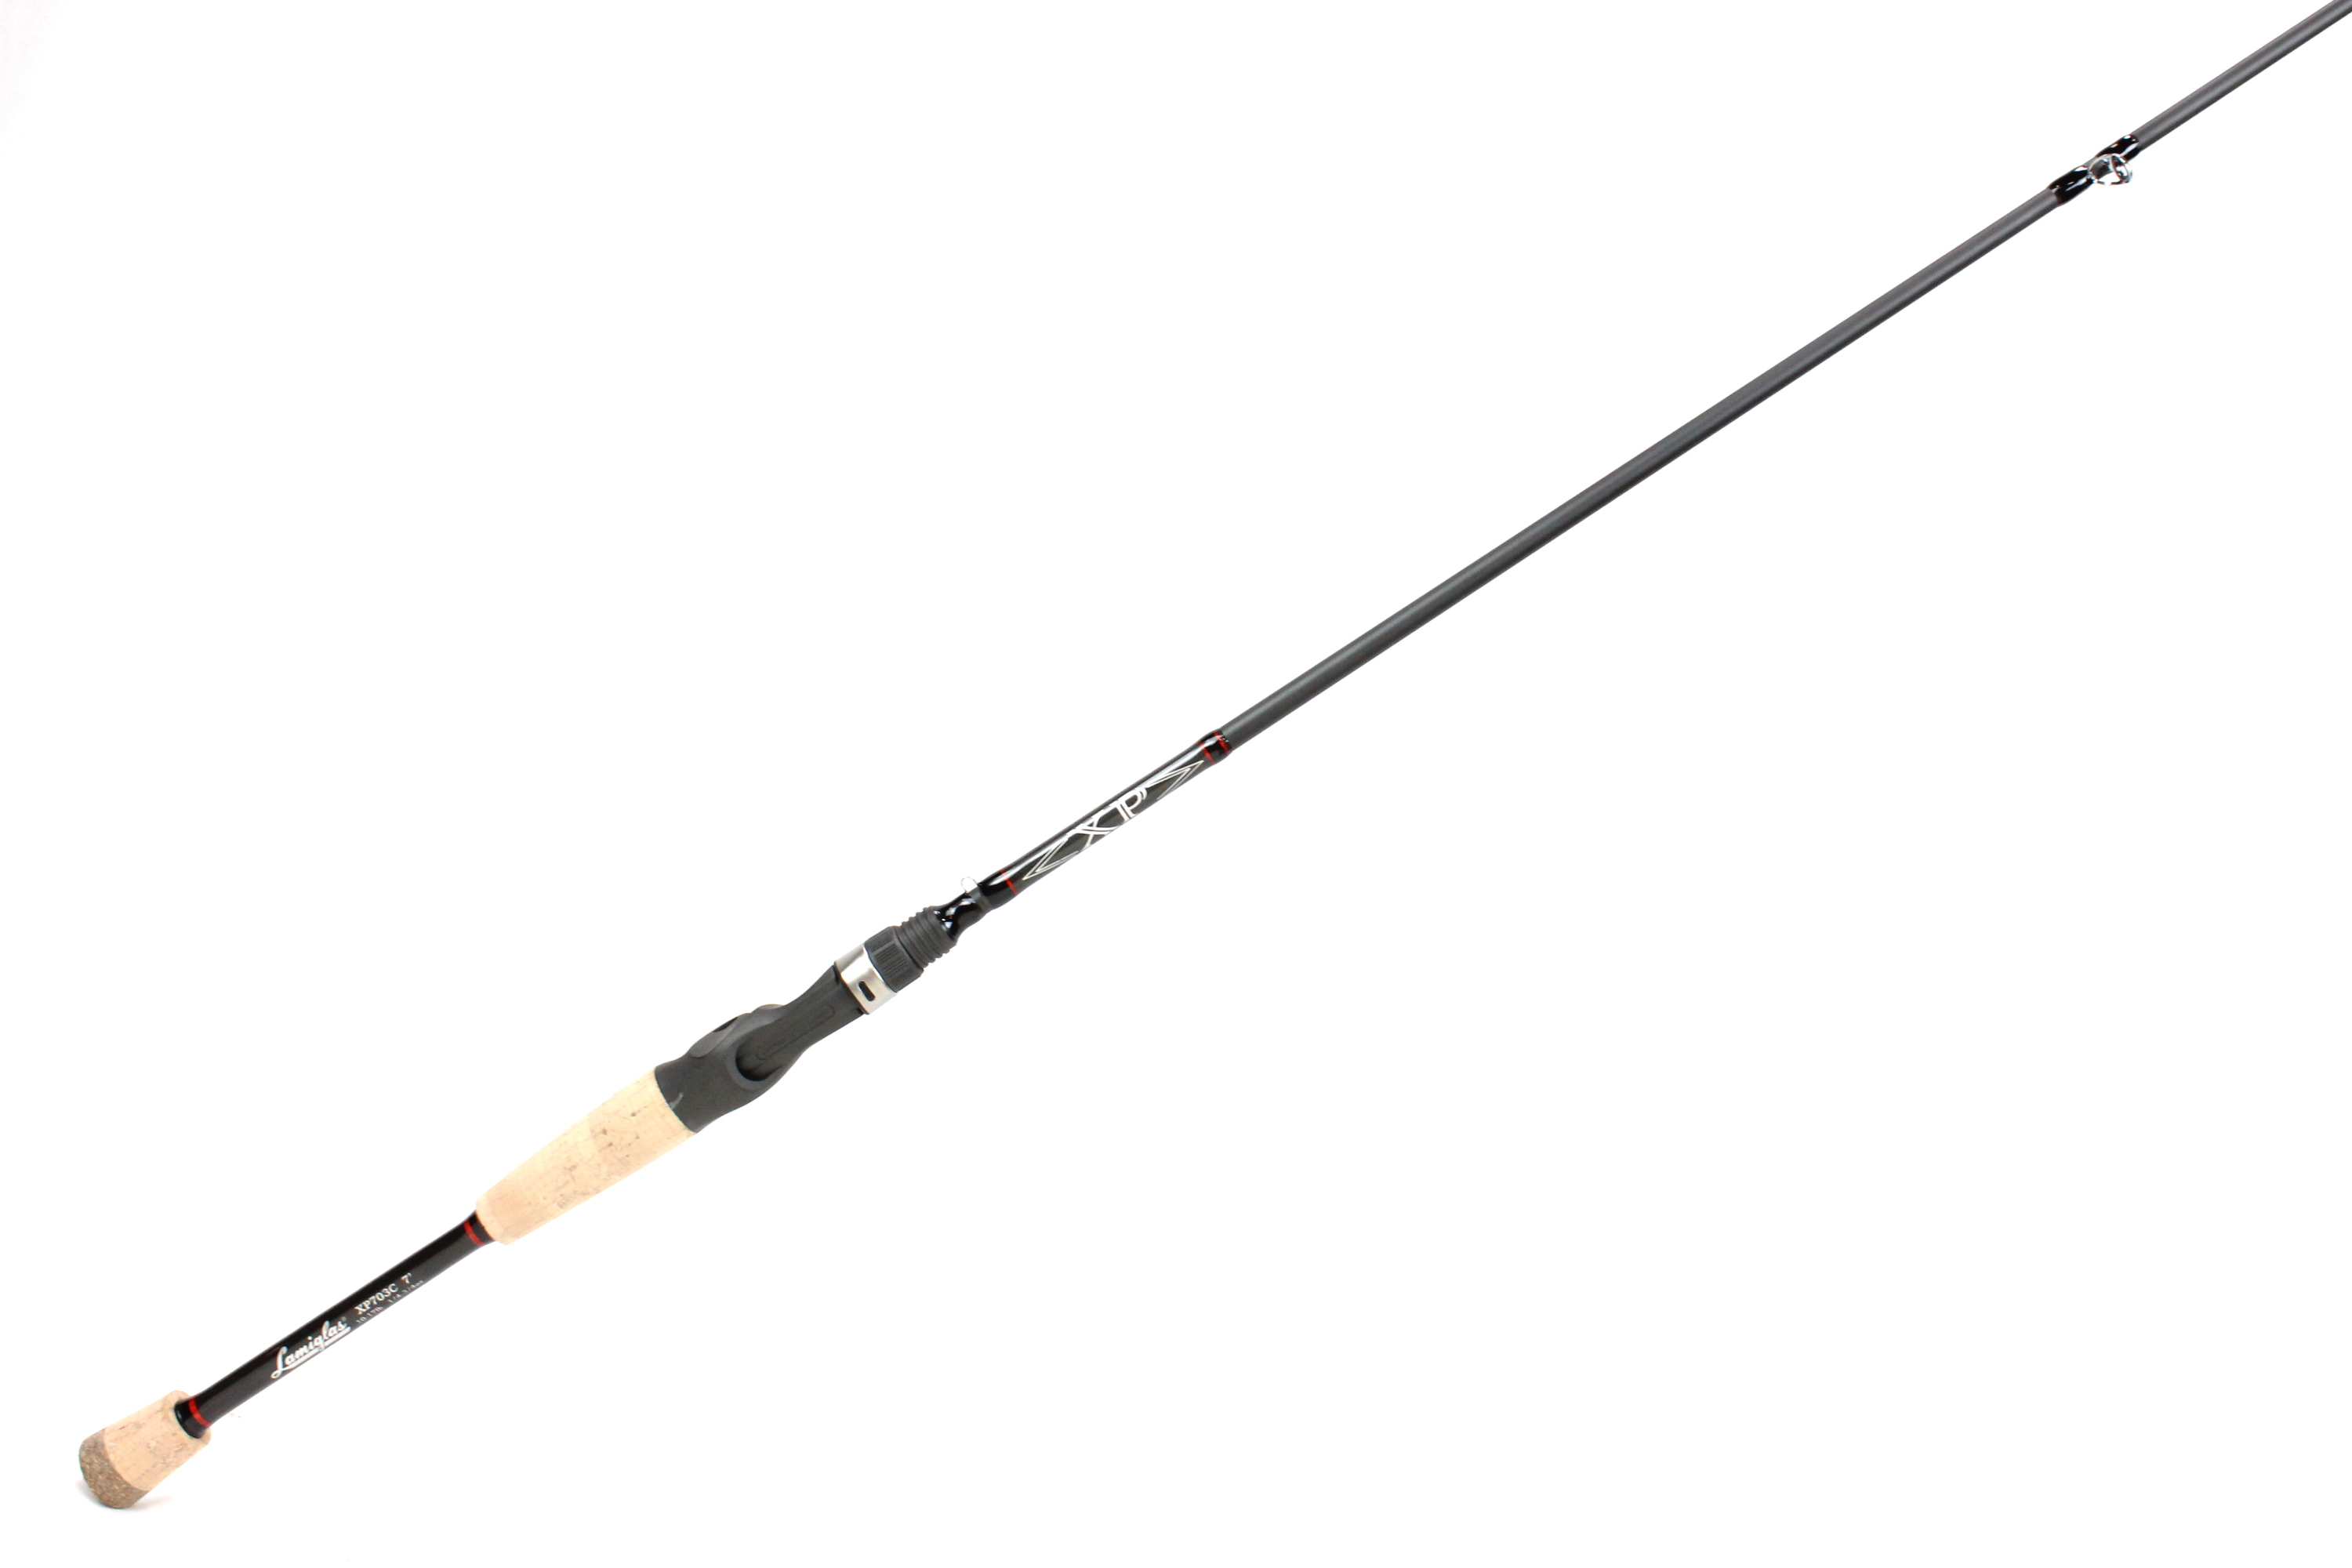 Lamiglas XP Bass Rod, 1 Piece, 15-30 Line, WT, 1/2-3 Lure, Moderate/Fast,  Heavy Cork Handle